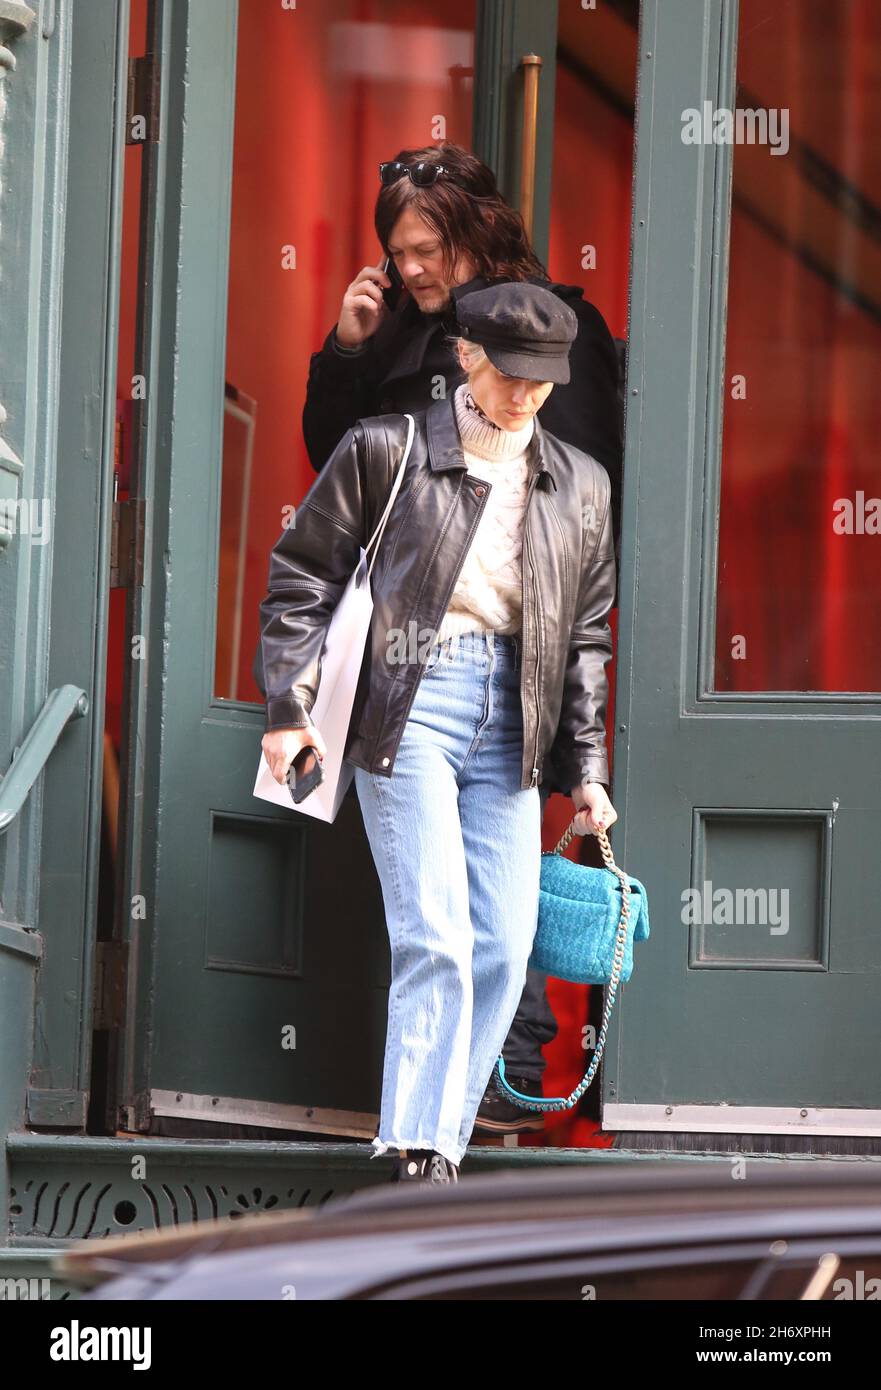 Diane Kruger New York City January 25, 2021 – Star Style